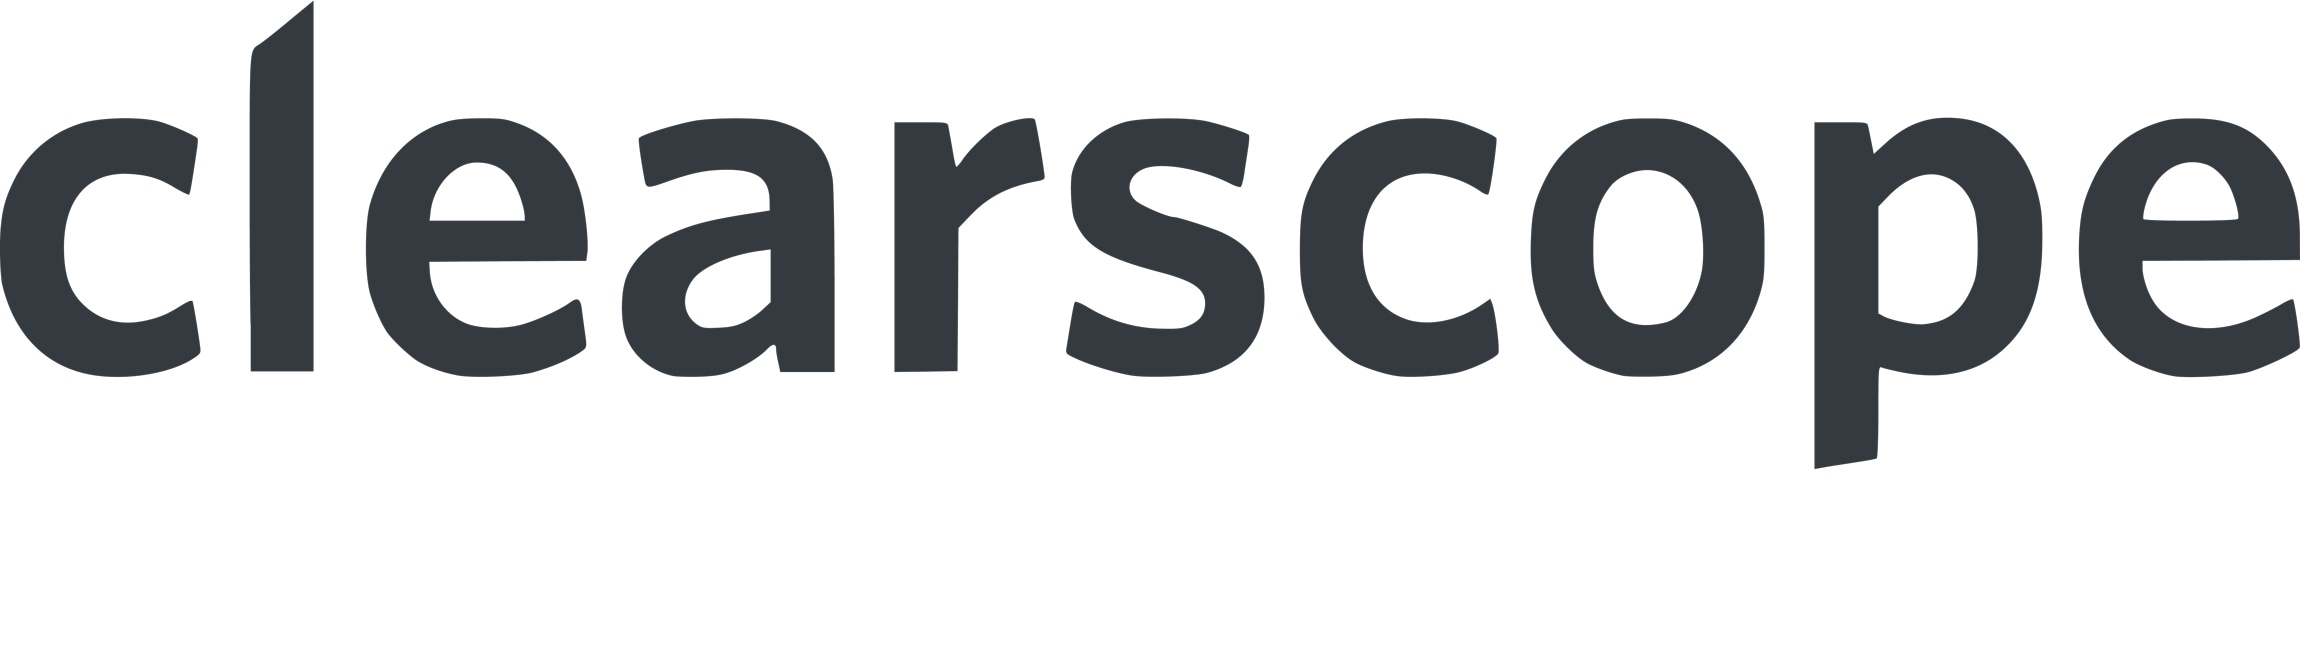 Clearscope logo